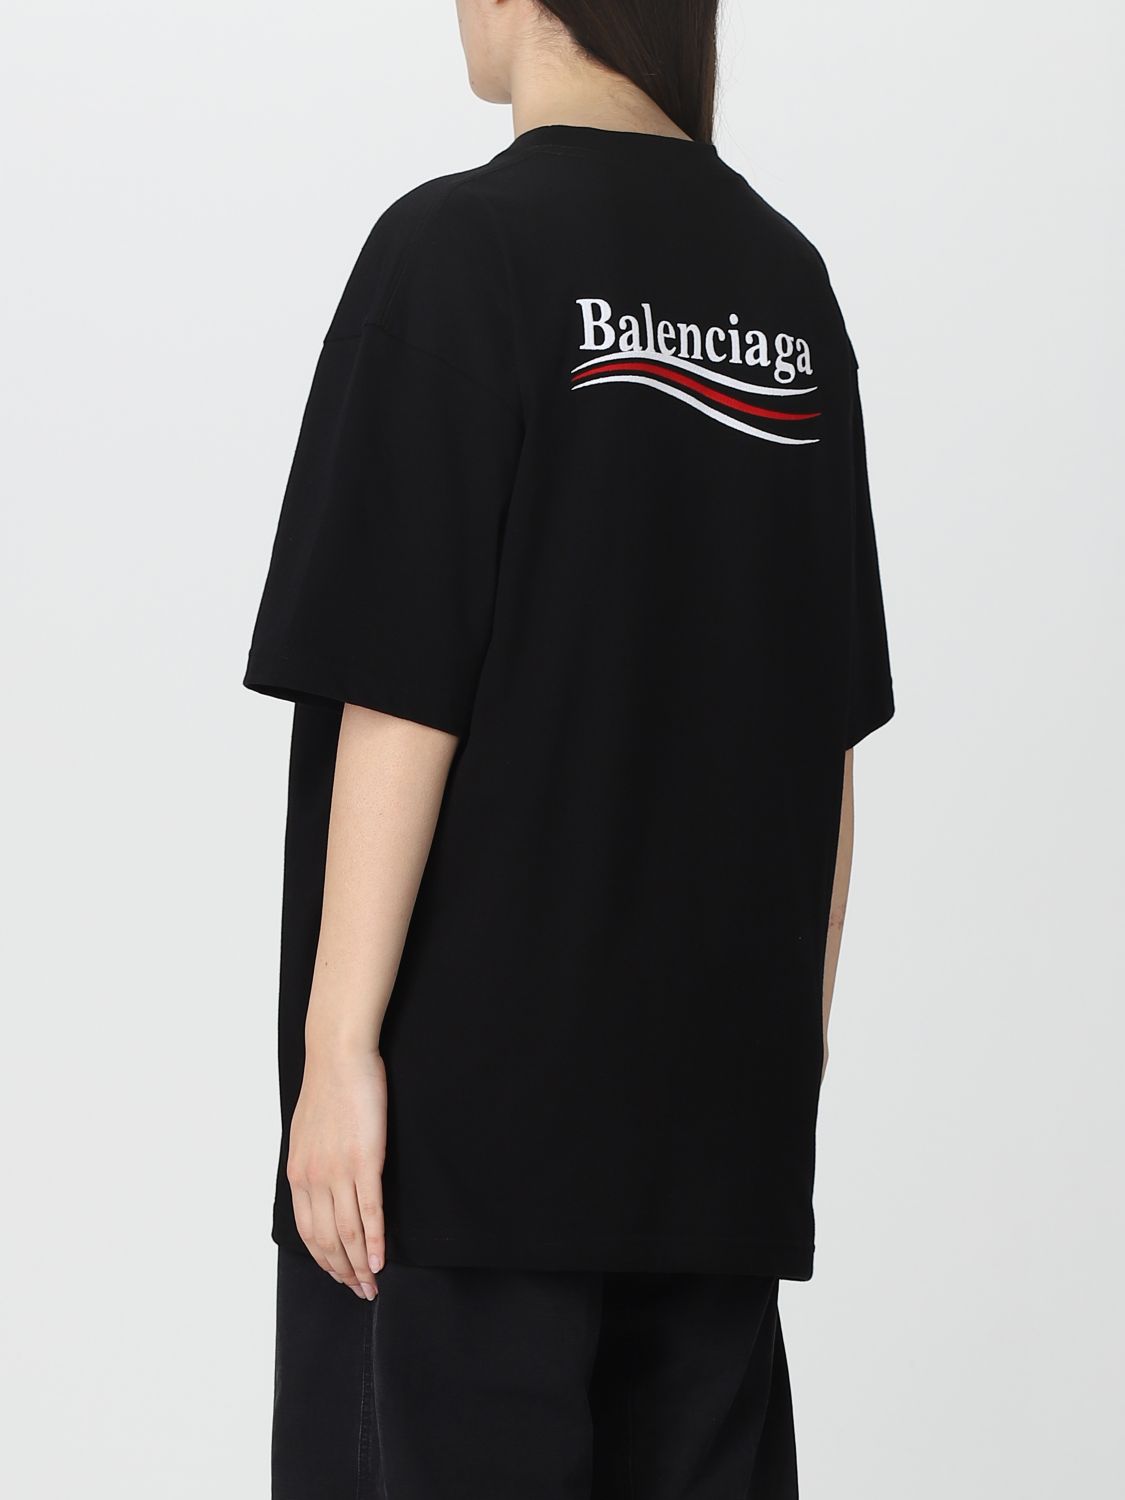 Balenciaga Black oversize T-shirt with logo